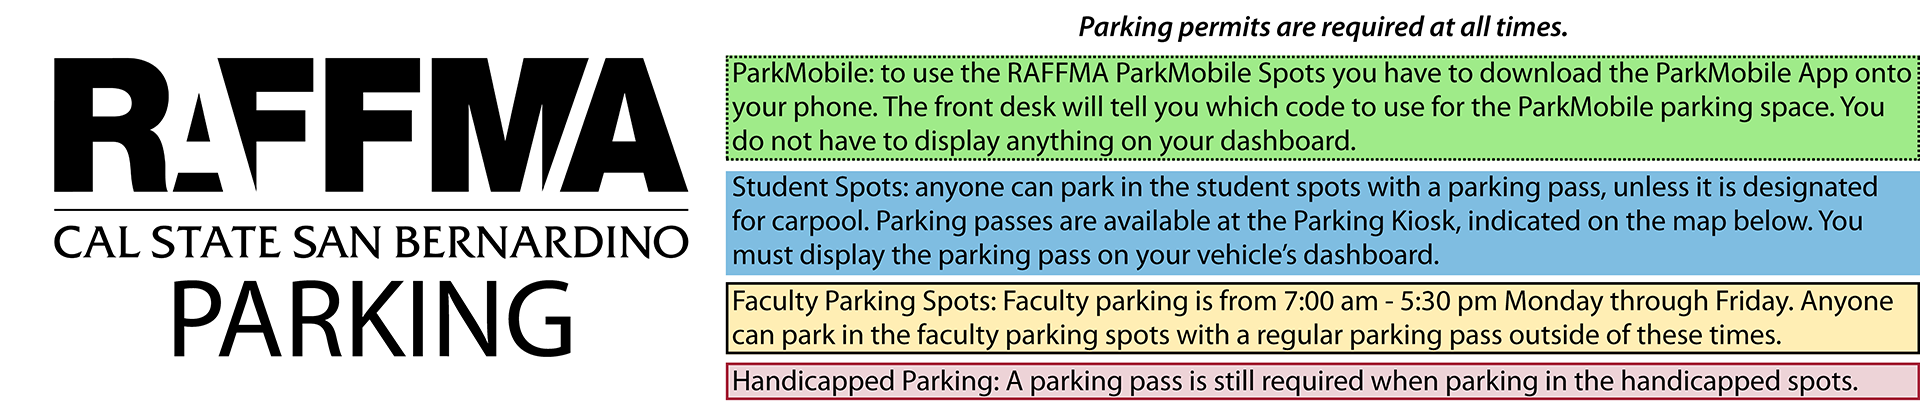 Raffma Parking Instructions 